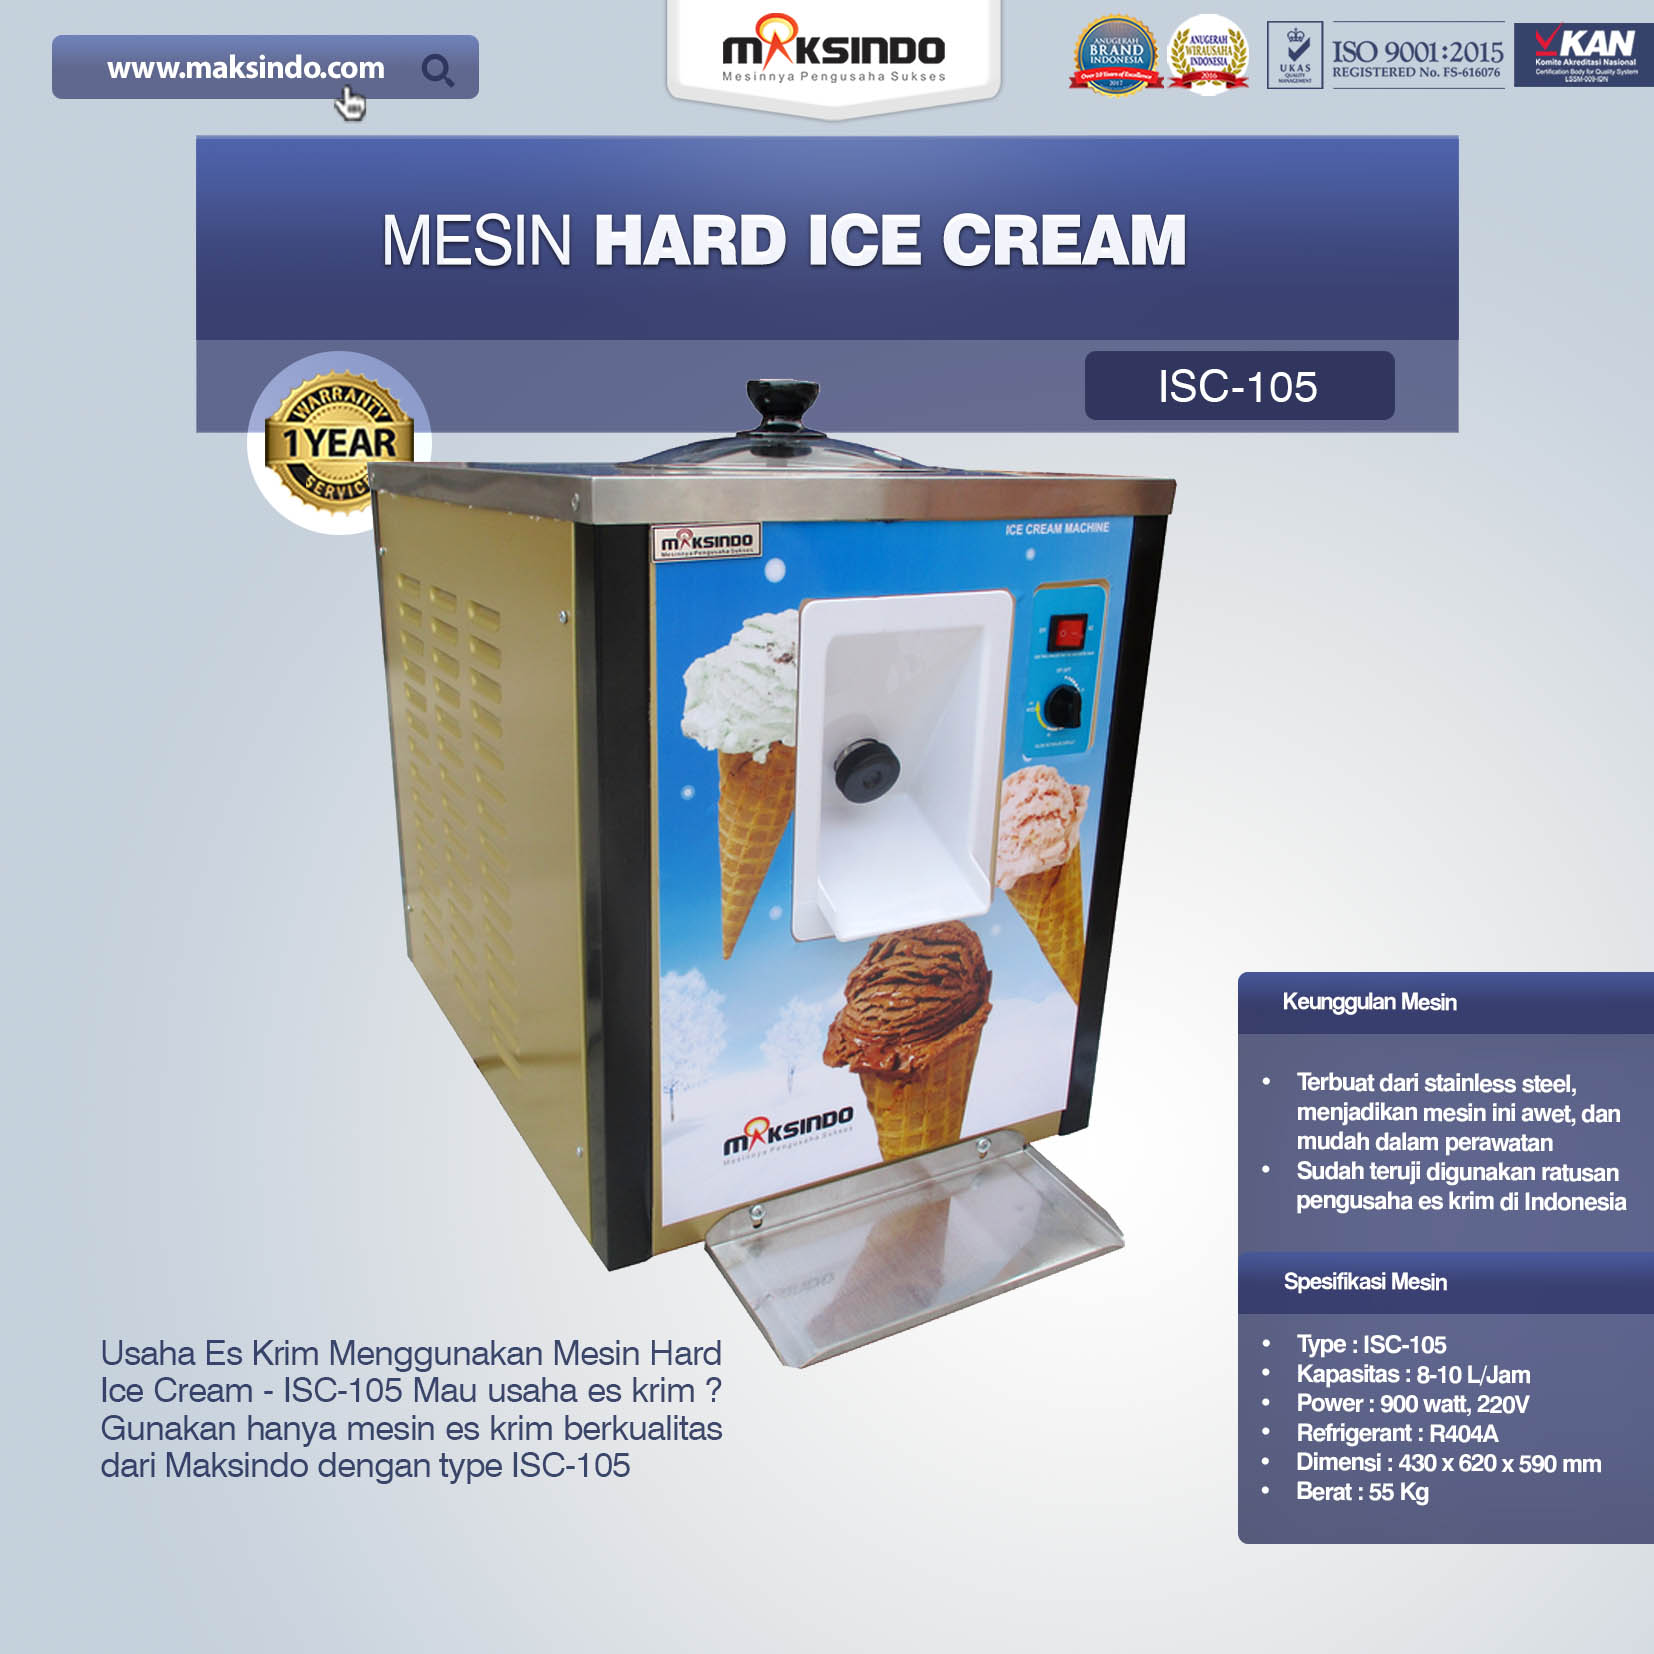 Mesin Hard Ice Cream ISC-105